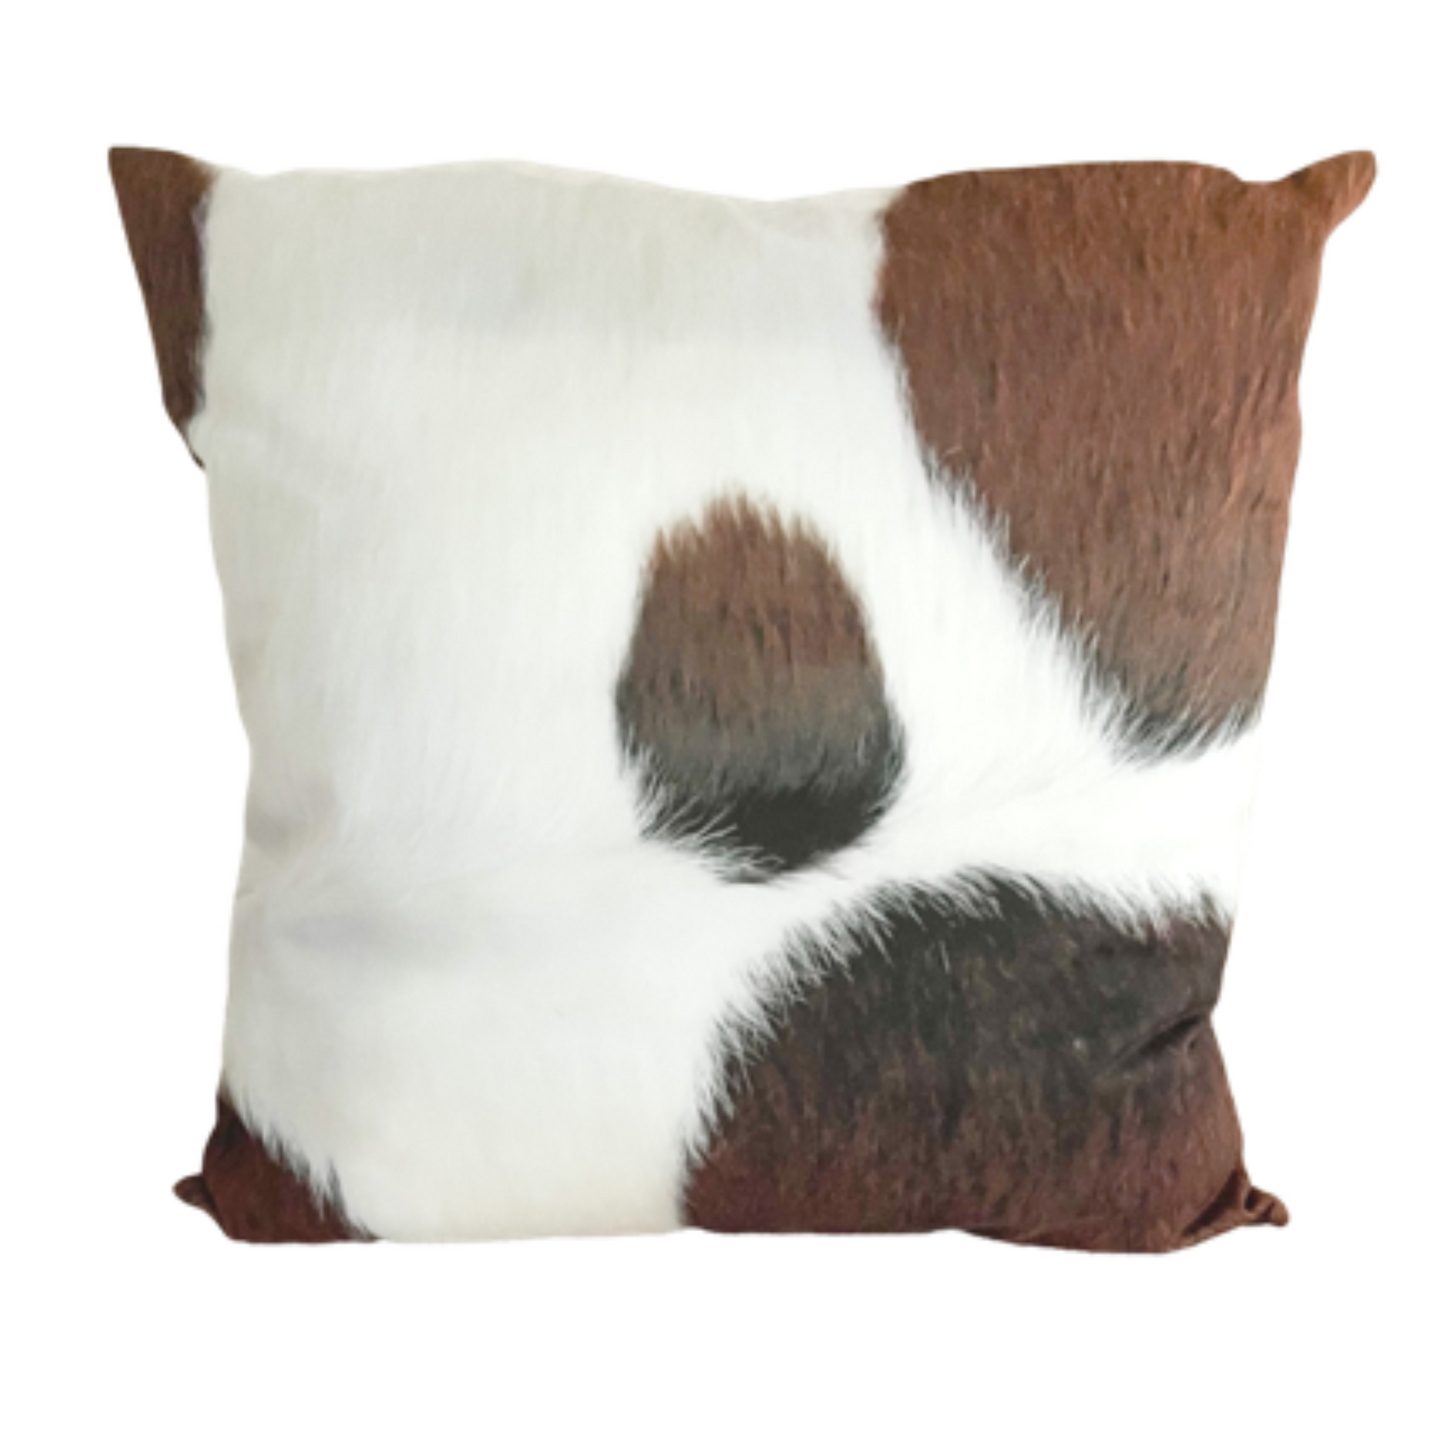 Faux Cowhide Pillow Cover, Cow Print Pillow, Circle Spot Cow Print Pillow